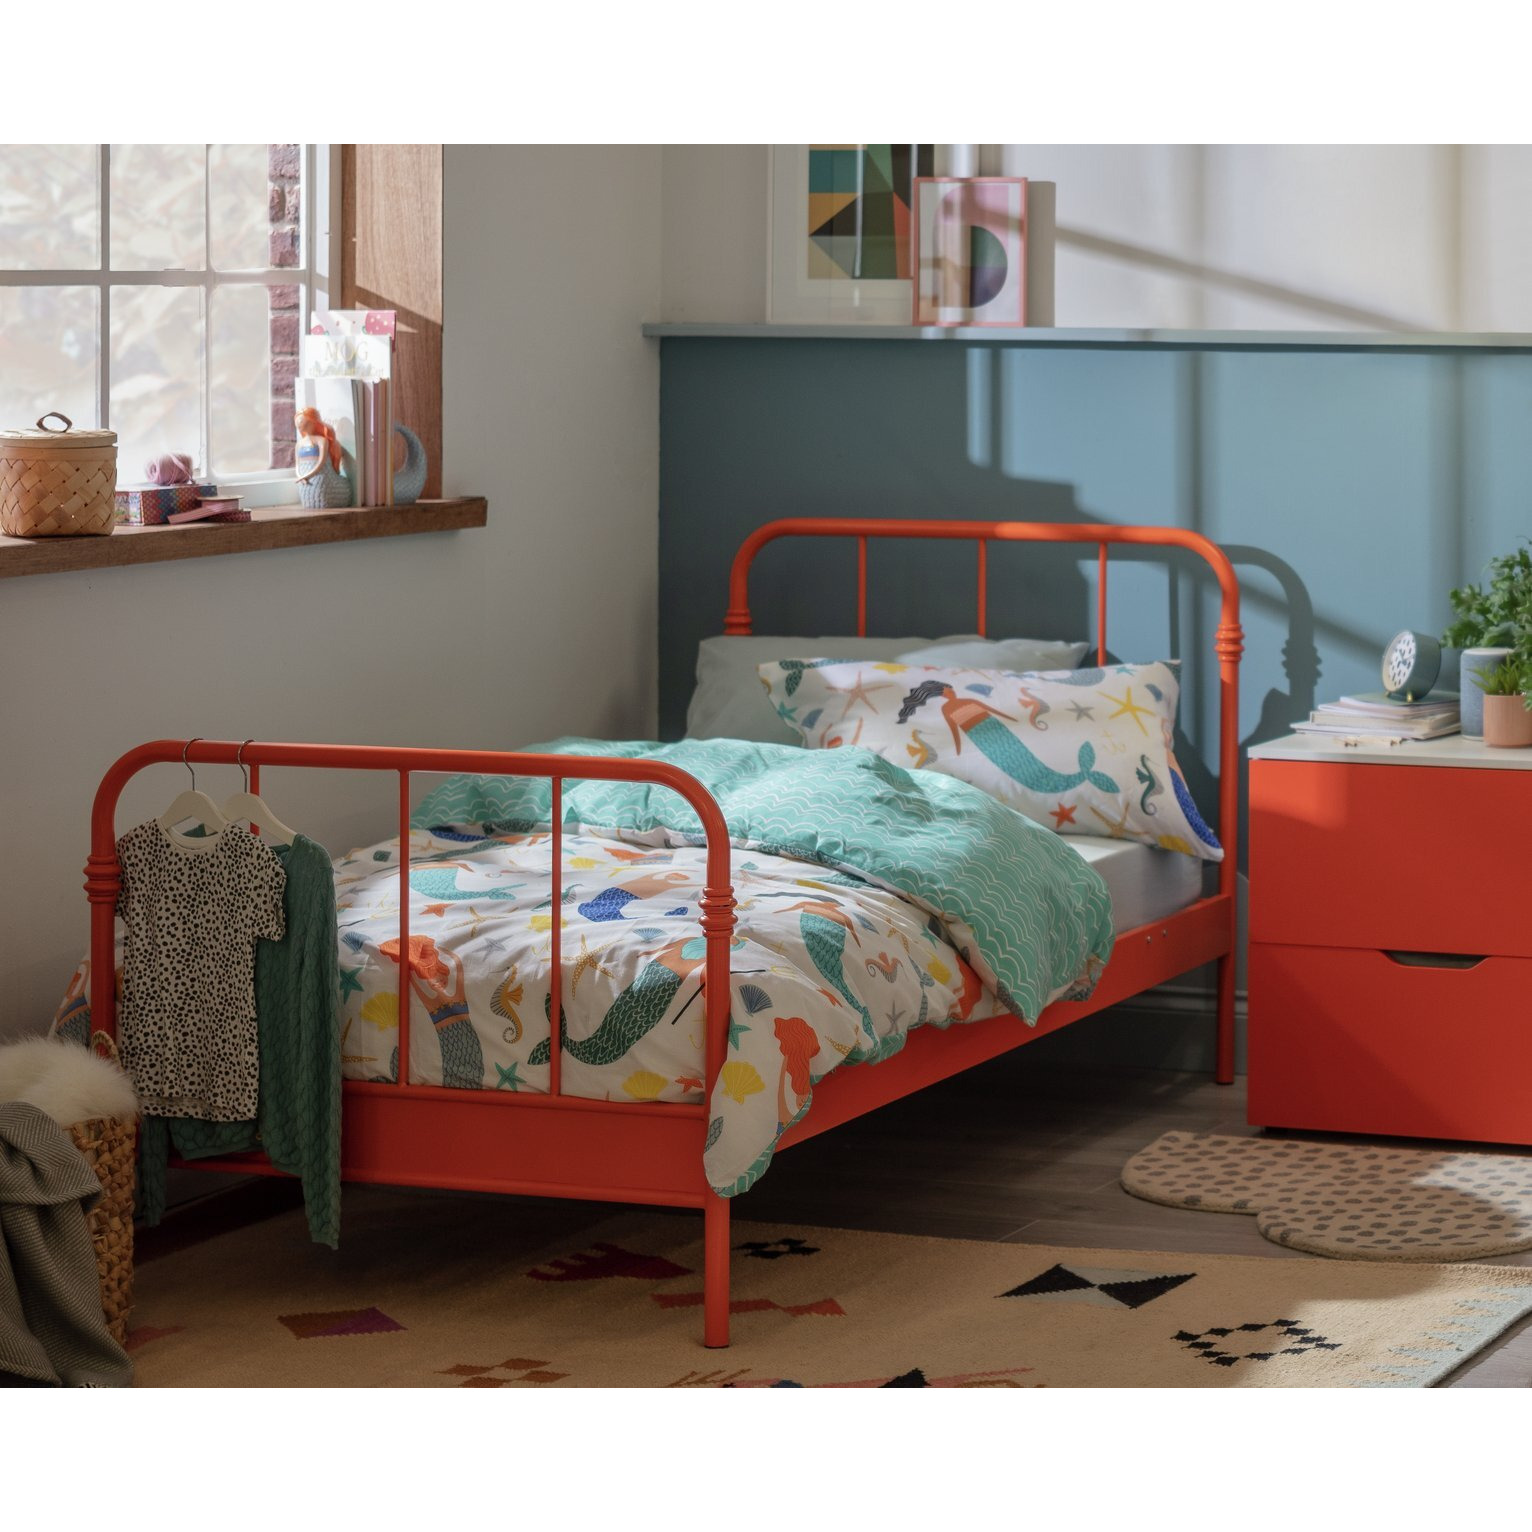 Habitat Jett Single Metal Bed Frame & Mattress - Orange - image 1